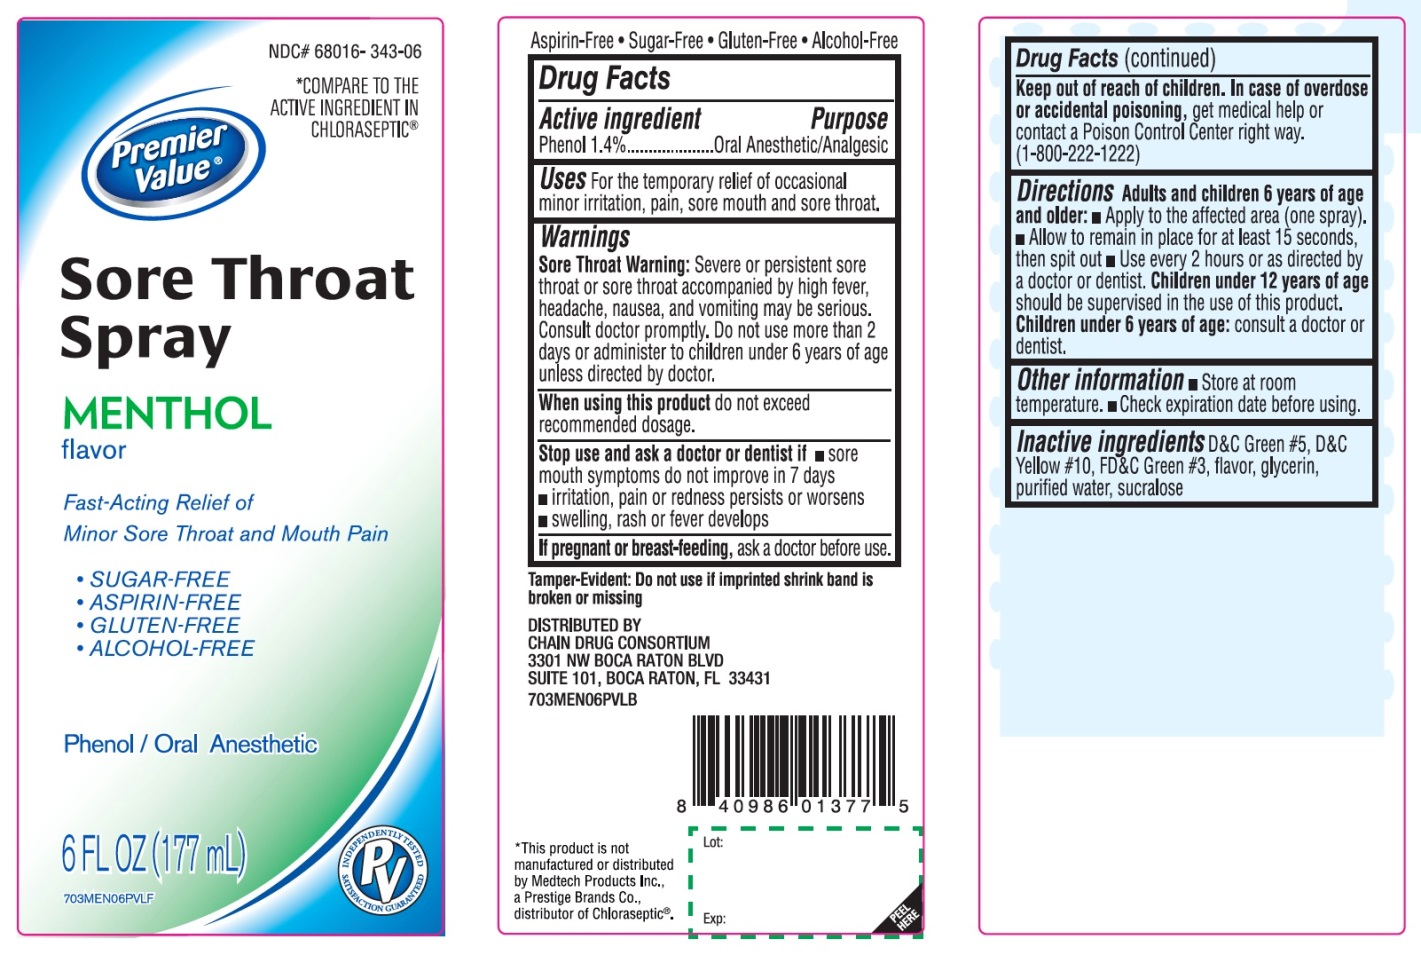 Premier Value Sore Throat Spray Menthol Flavor